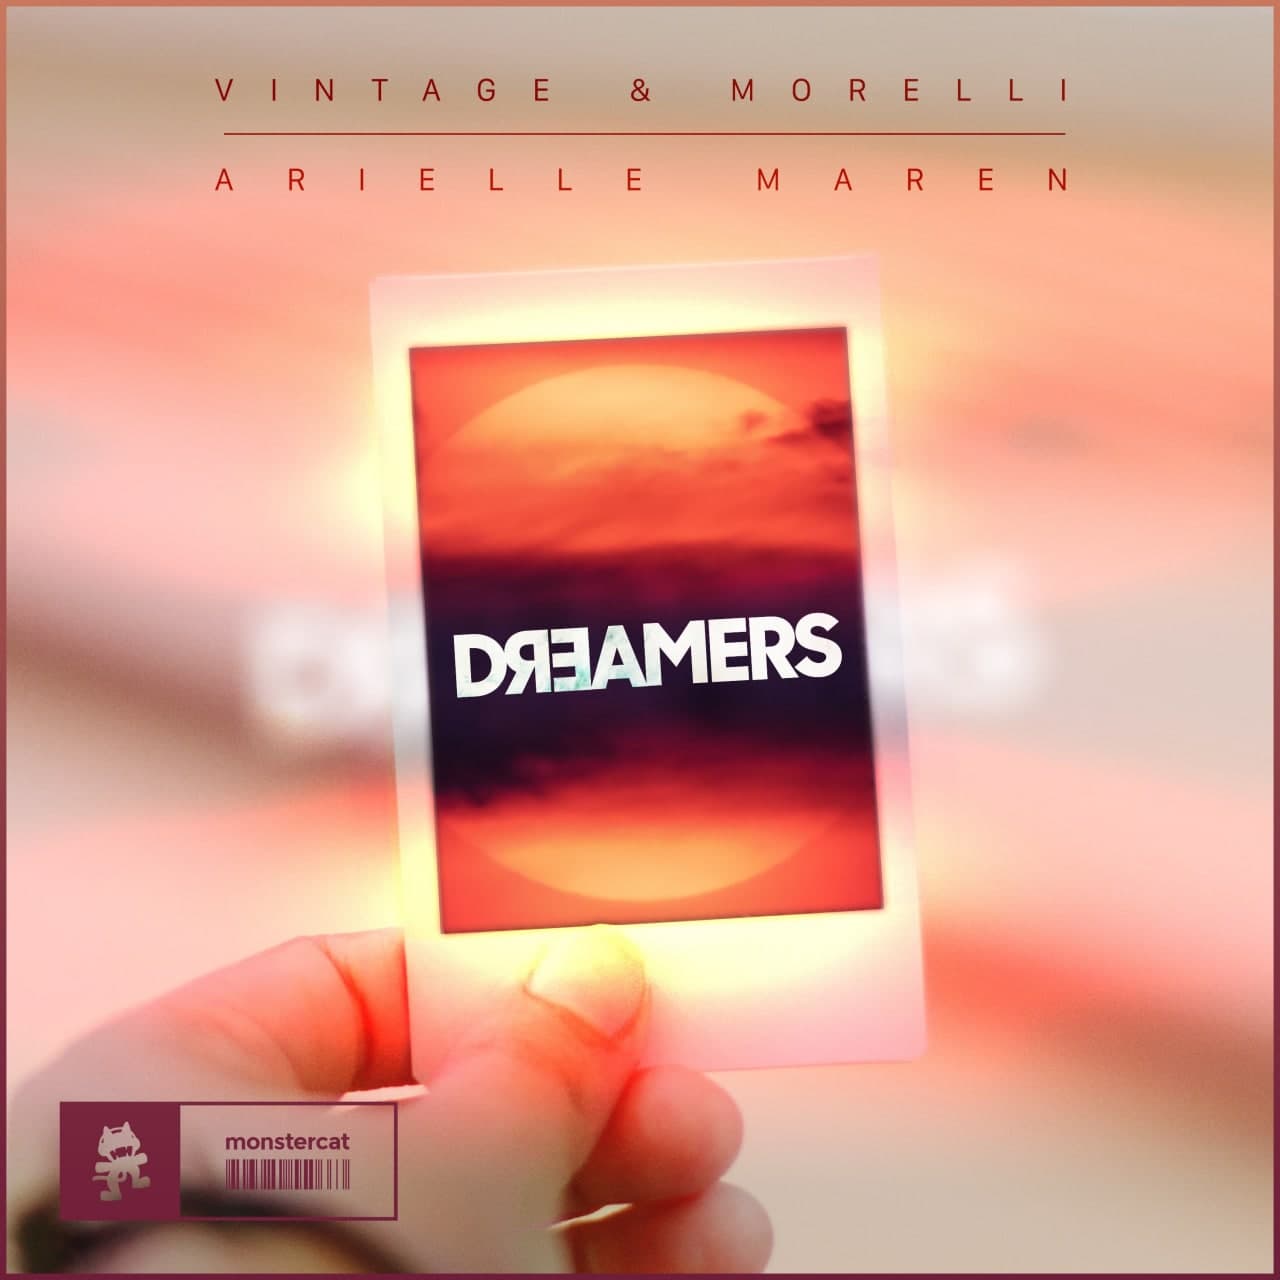 Vintage & Morelli feat. Arielle Maren - Dreamers (Extended Mix)